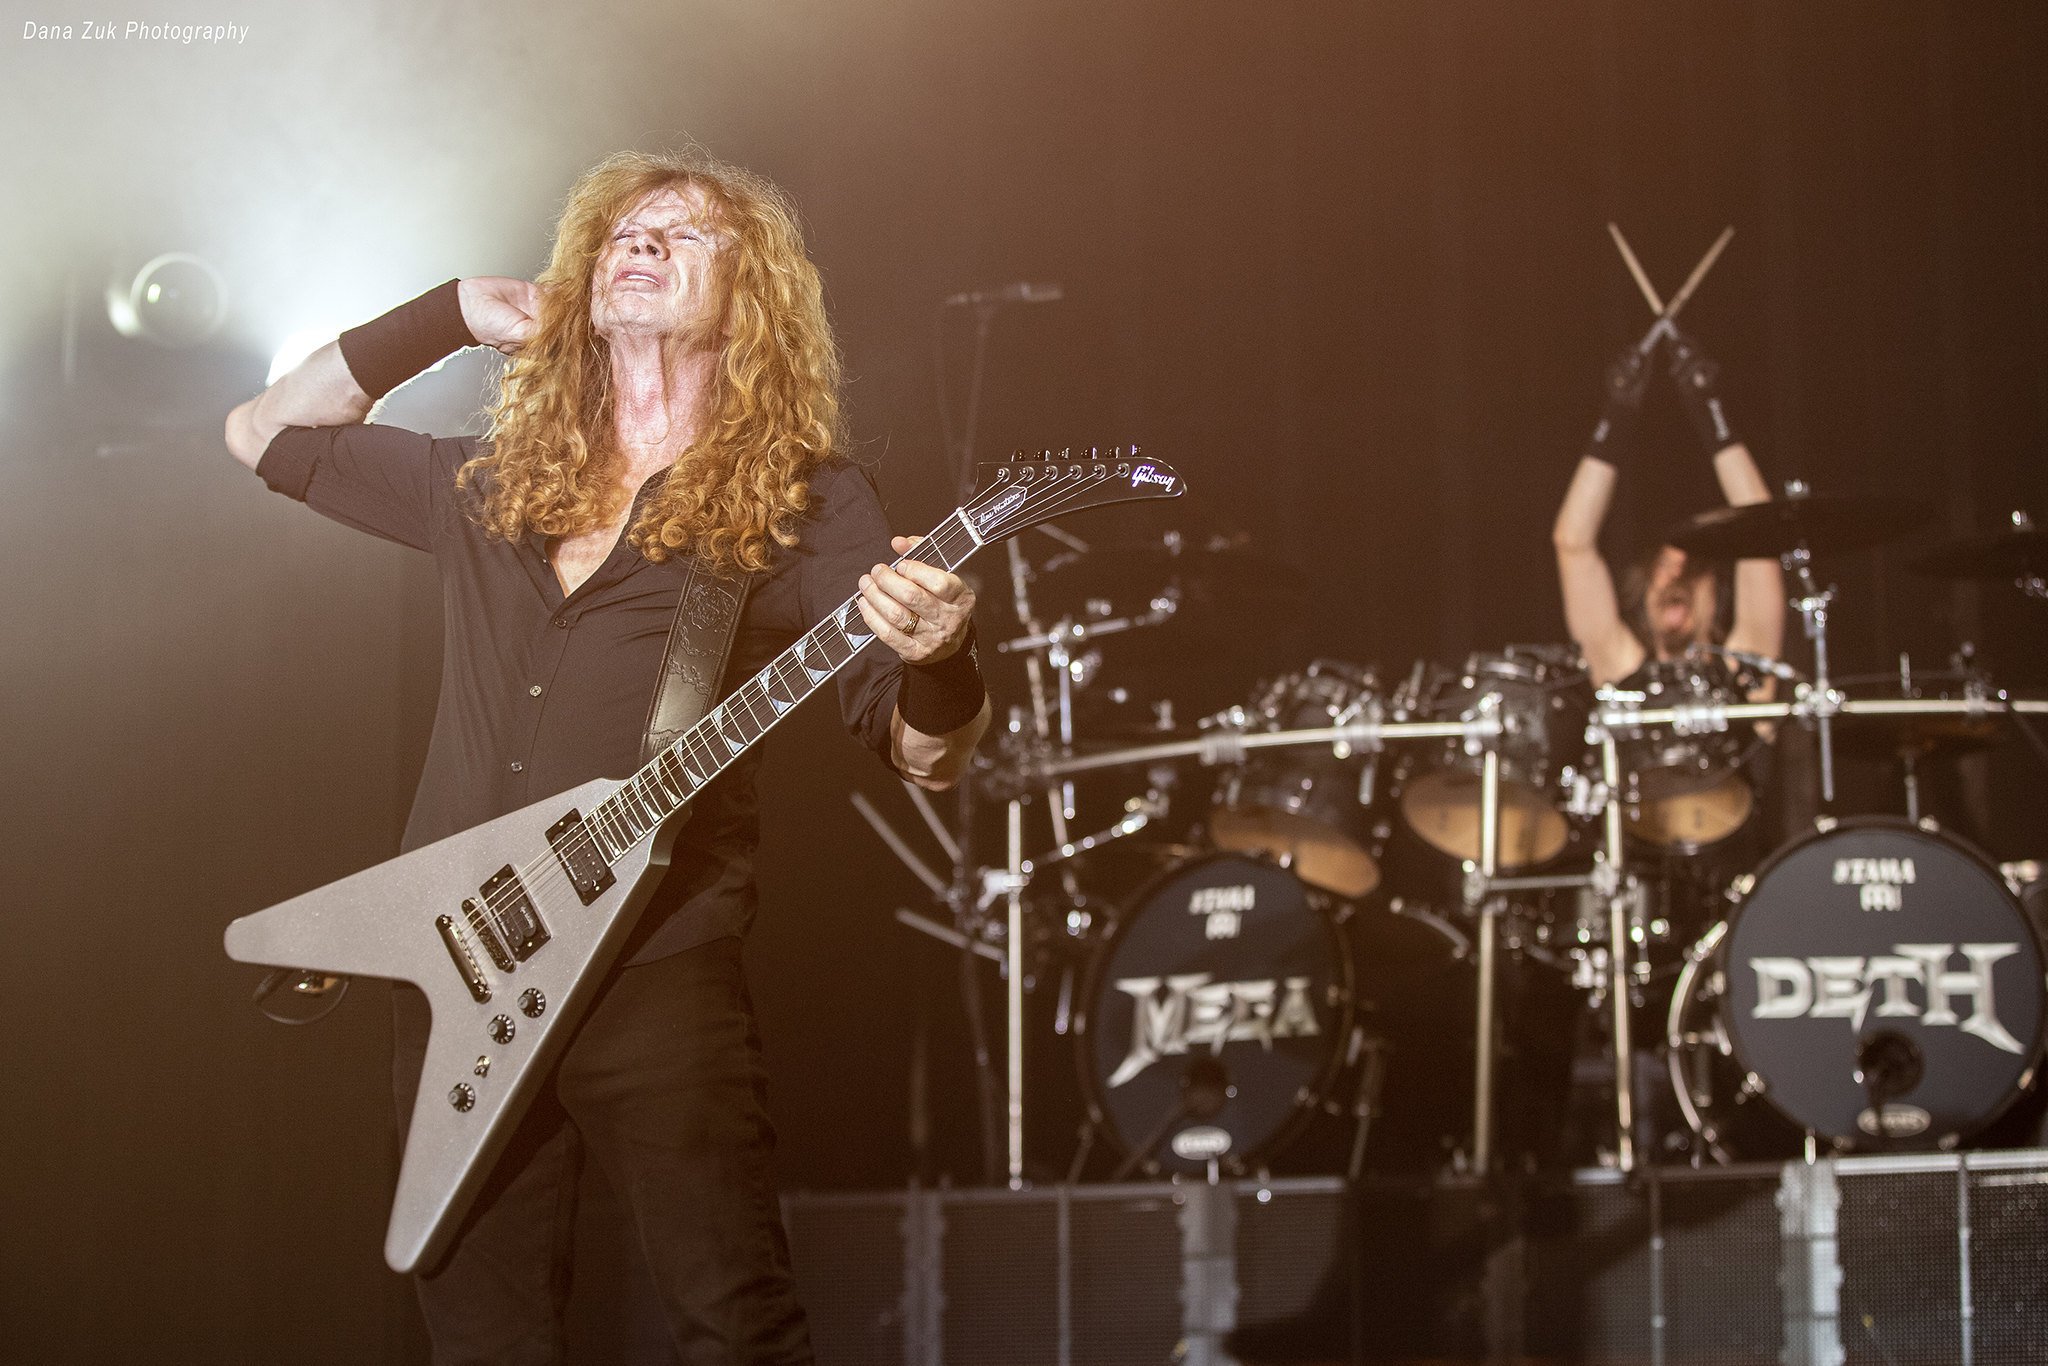 Megadeth @ Edmonton Convention Centre, photo by Dana Zuk